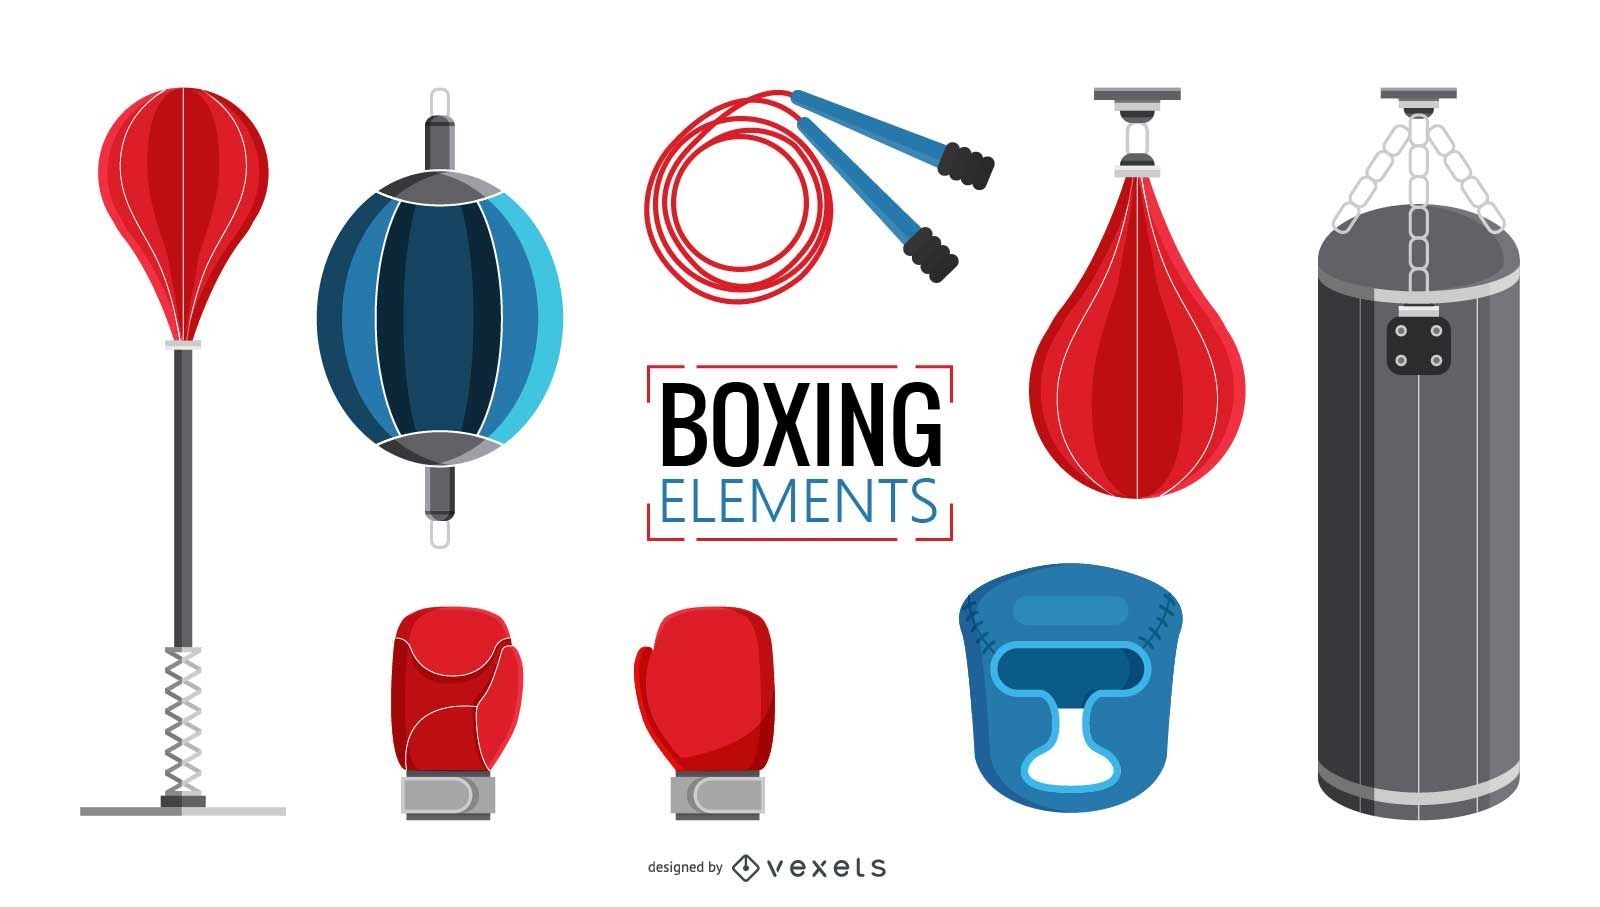 Boxing elements illustration set